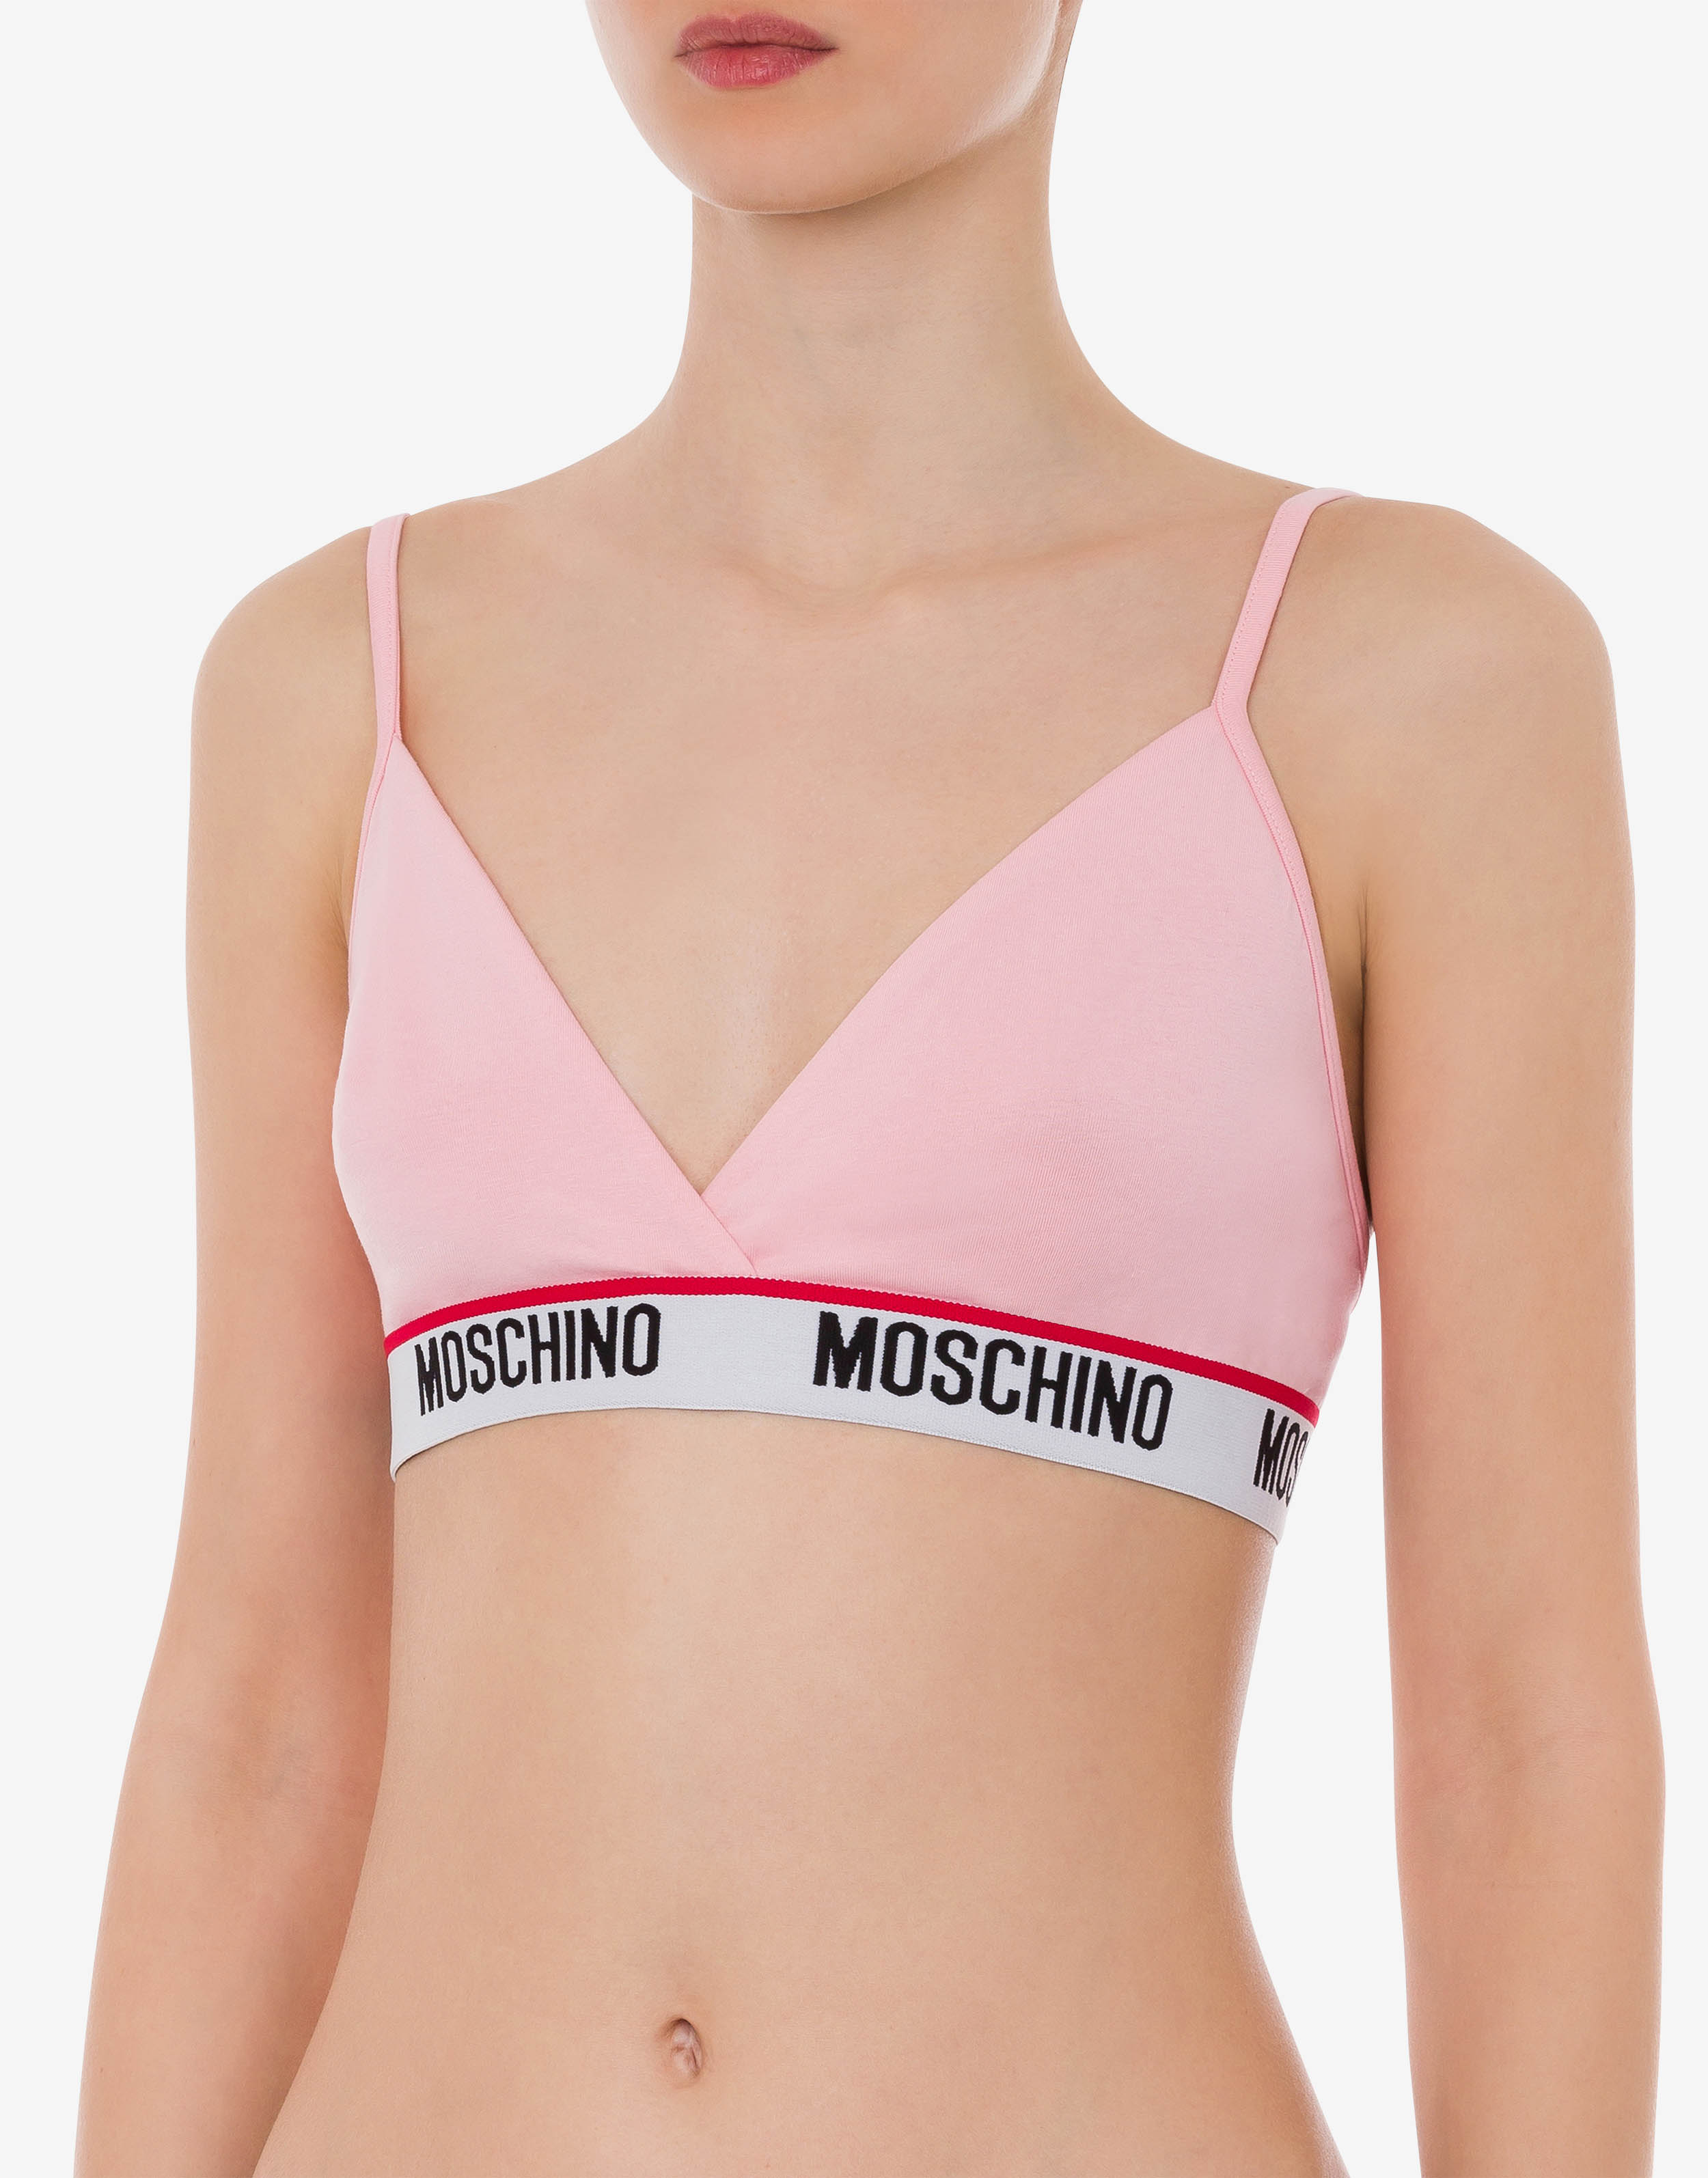 Moschino Pink/Blue Bustier Sleevess Bra Top sz 38 w/ Tags – Mine